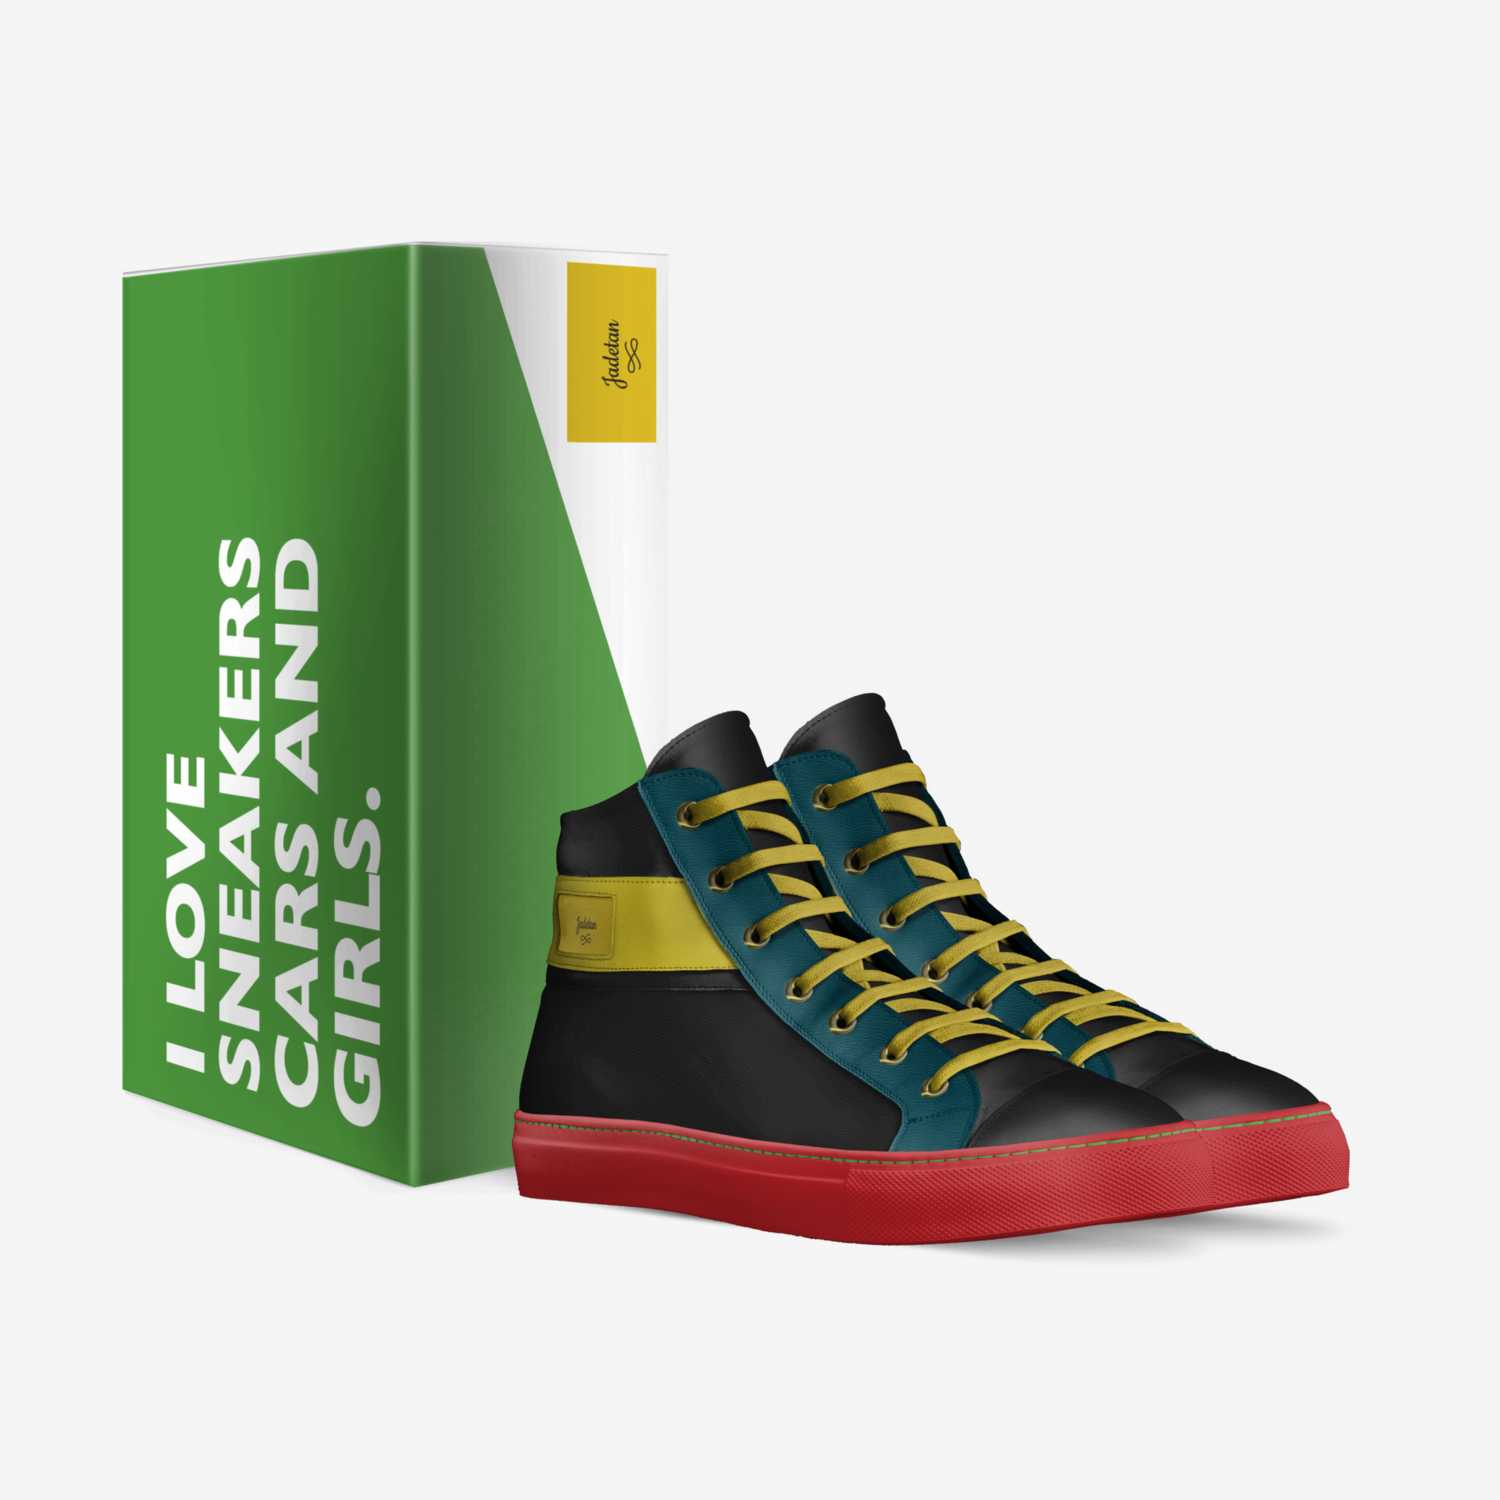 Jadetan custom made in Italy shoes by Samuel Olanrewaju | Box view